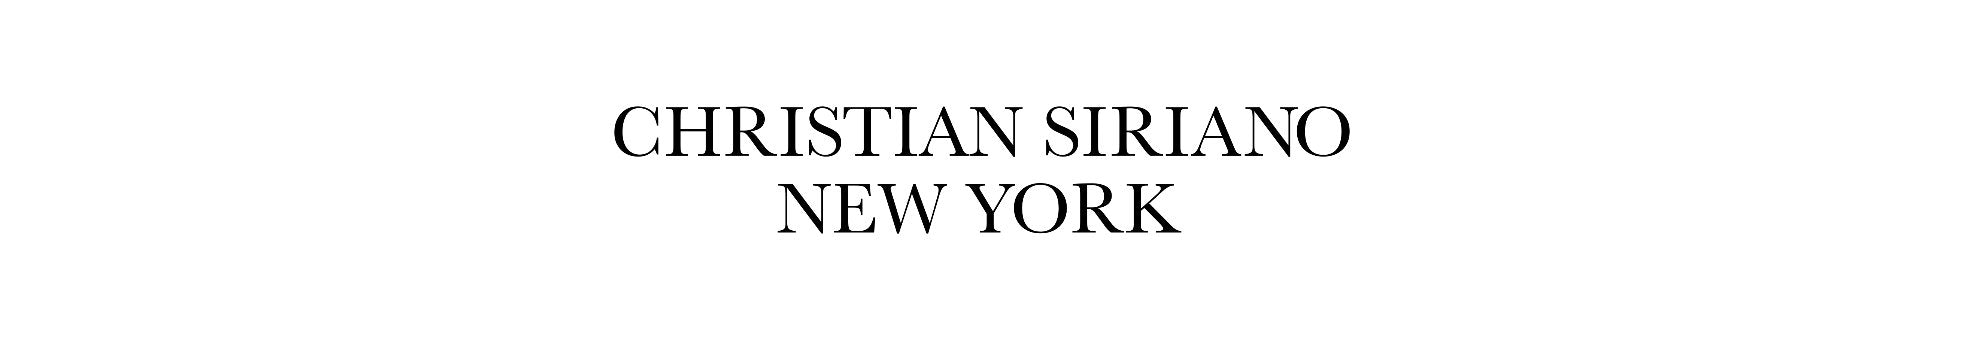 Christian Siriano New York Glassware Collection